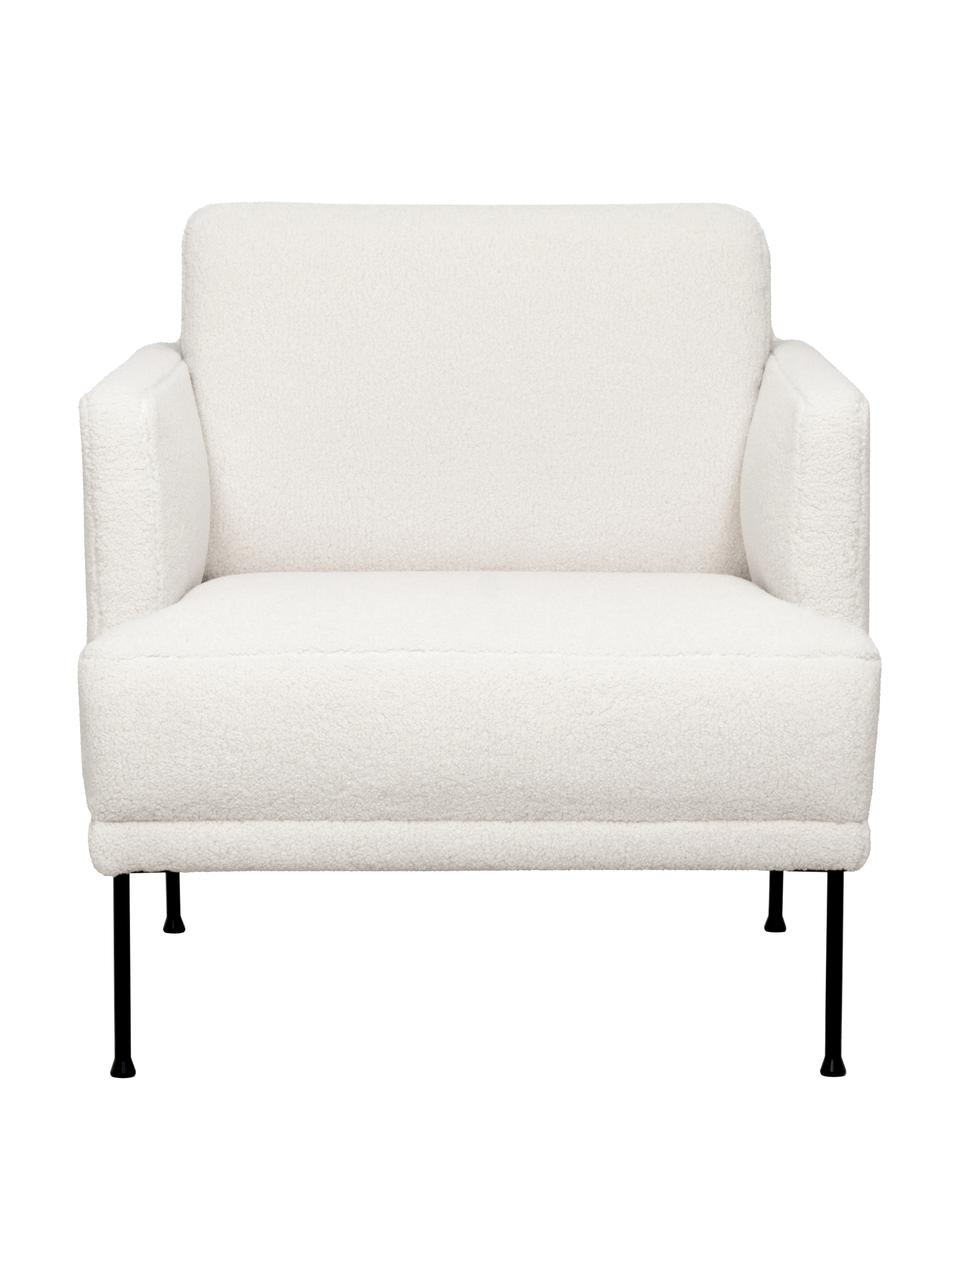 Teddy fauteuil Fluente met metalen poten, Bekleding: 100% polyester (teddyvach, Frame: massief grenenhout, FSC-g, Poten: gepoedercoat metaal, Teddy crèmewit, B 74 x D 85 cm